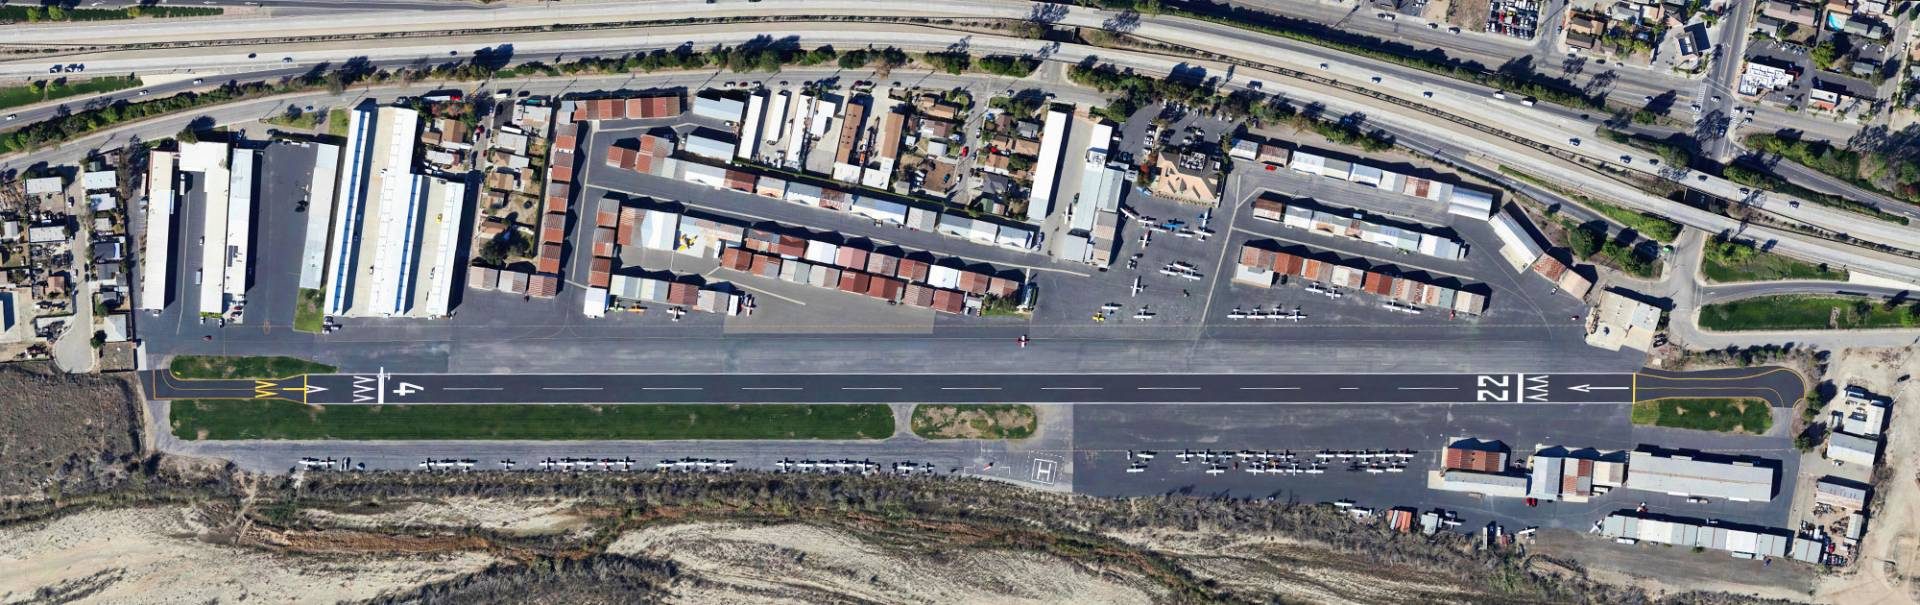 Santa Paula Airport Aerial Photograph